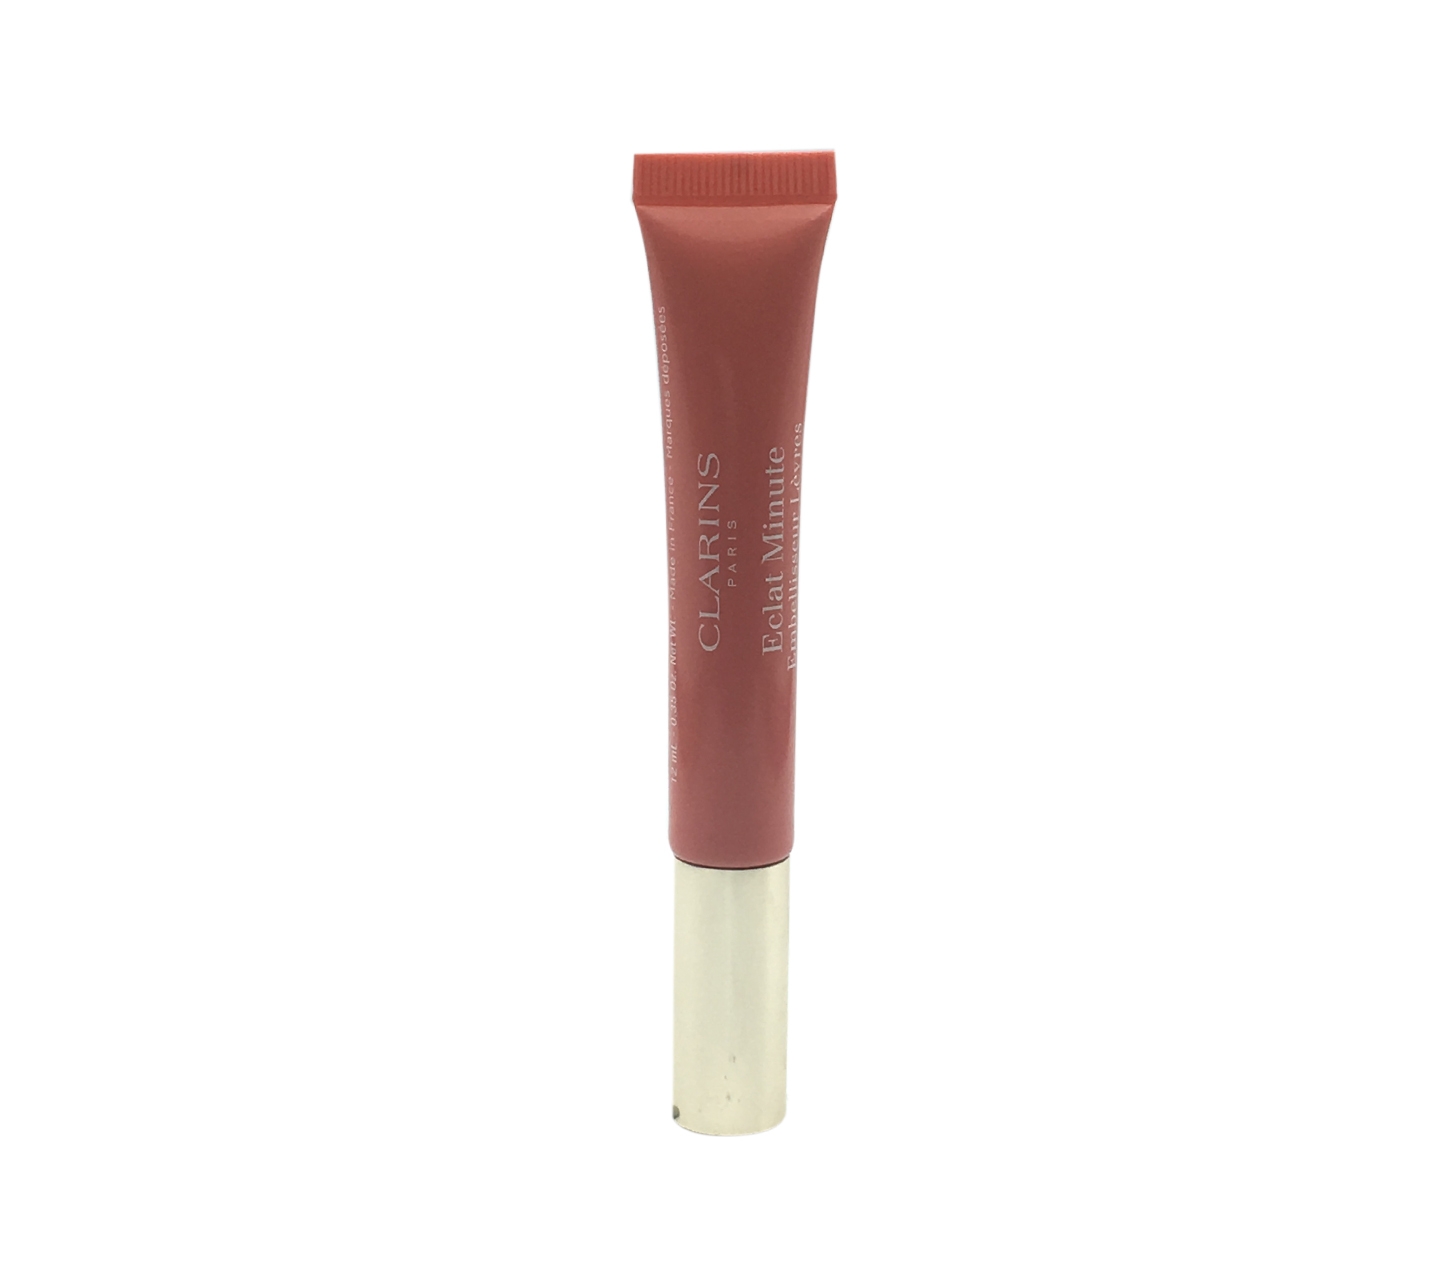 Clarins Instant Light Natural Lip Perfector Lipstick